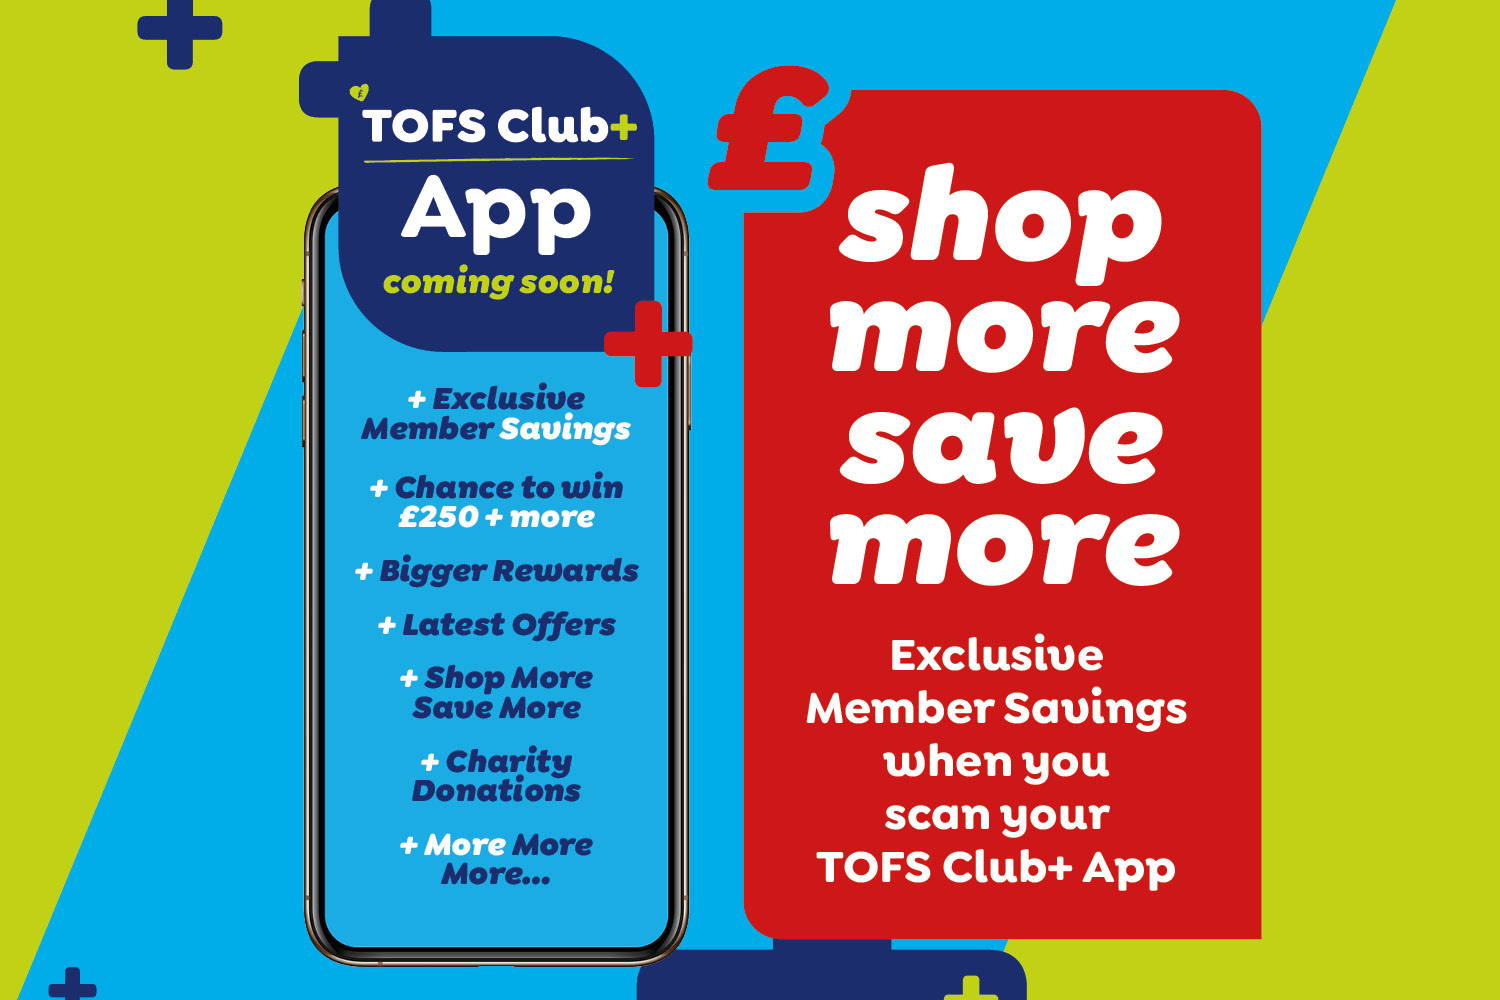 TOFS Club+ App Coming Soon